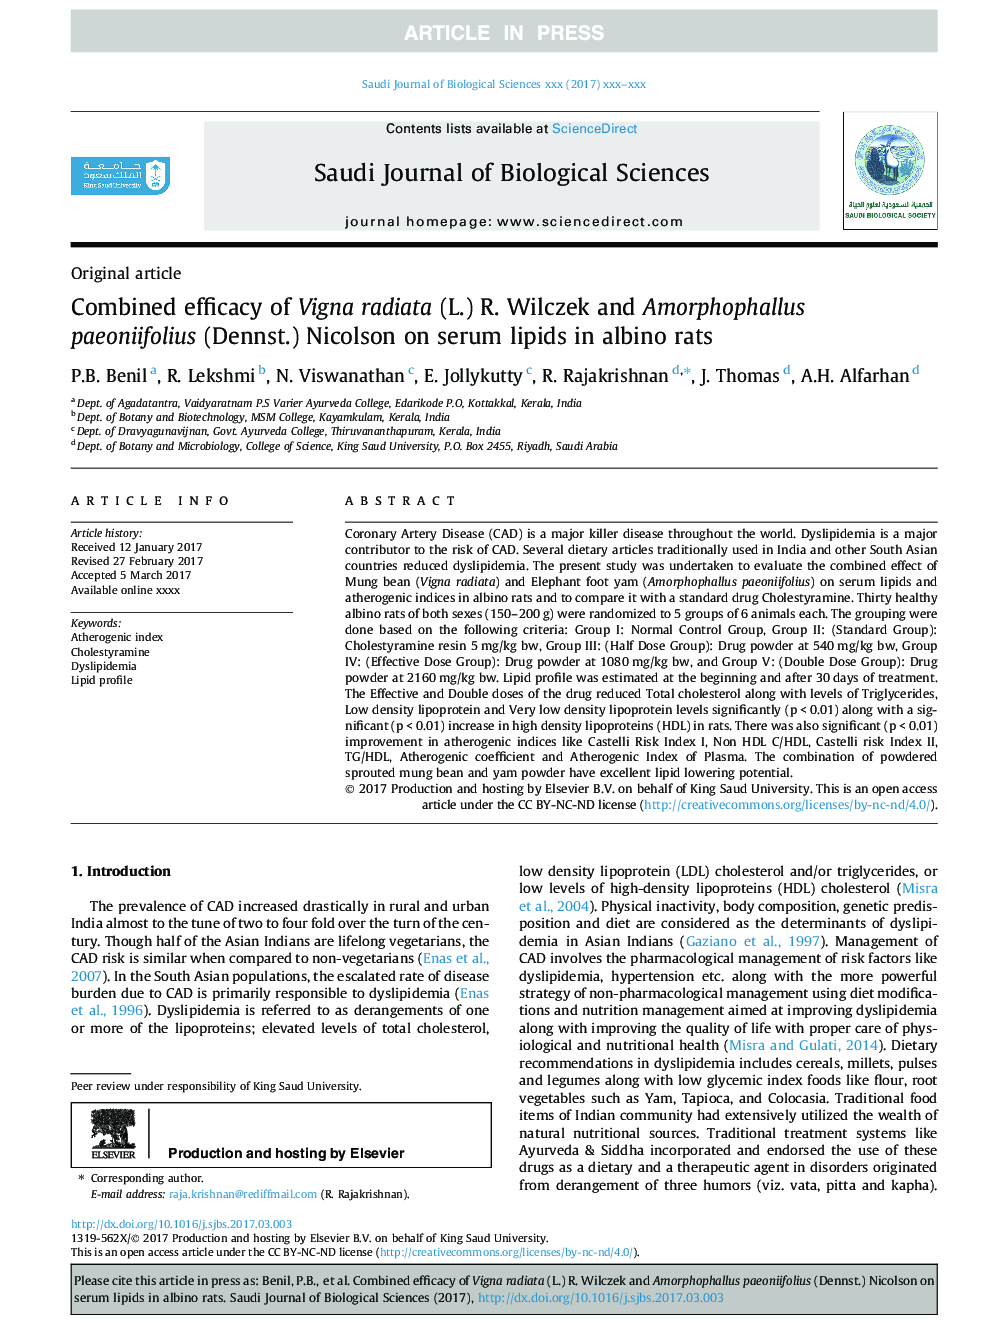 Combined efficacy of Vigna radiata (L.) R. Wilczek and Amorphophallus paeoniifolius (Dennst.) Nicolson on serum lipids in albino rats